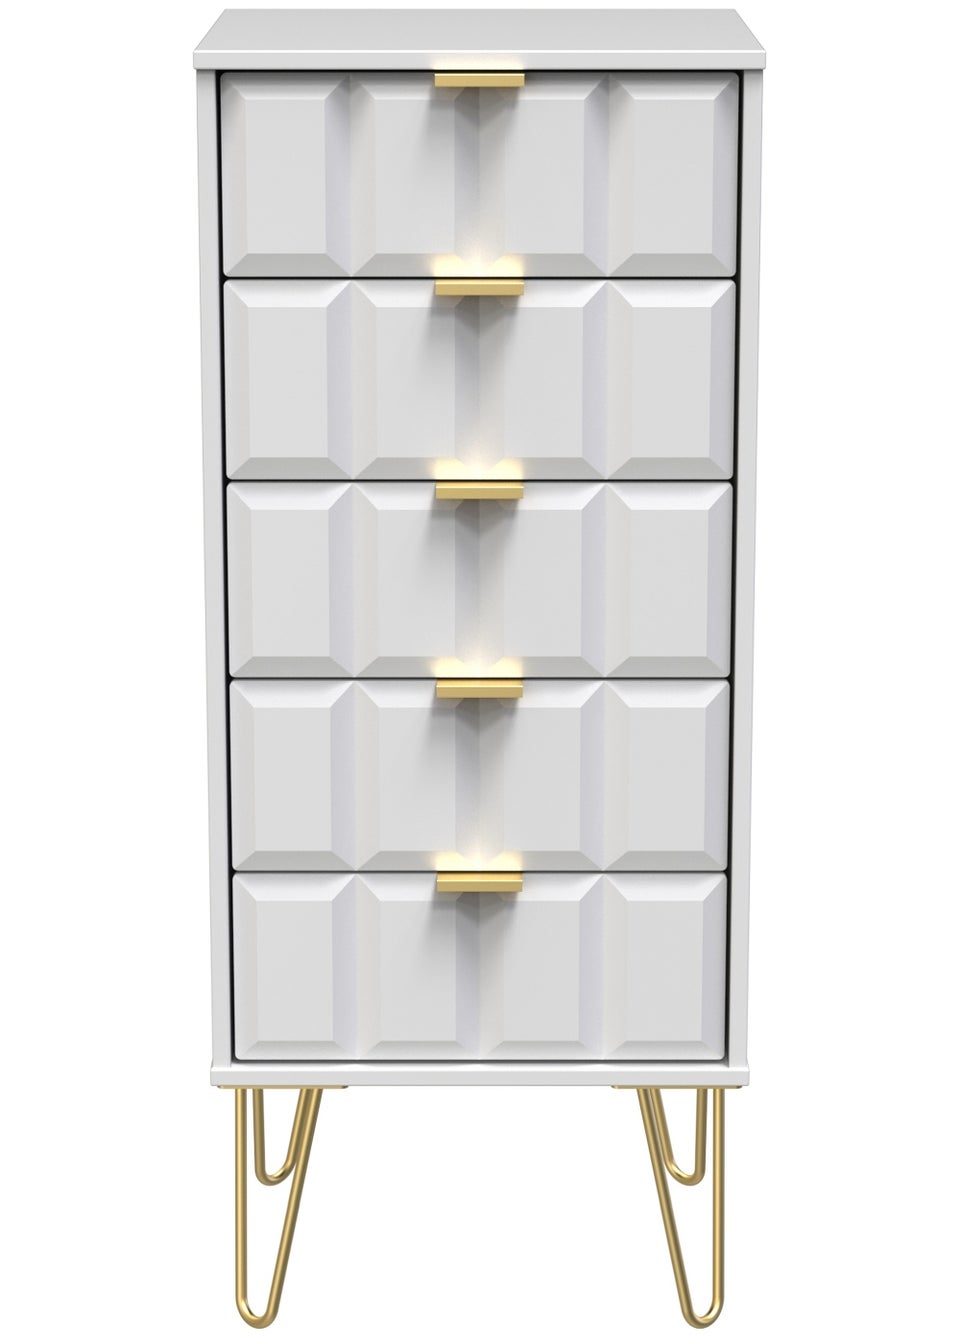 Swift Cube 5 Drawer Tall Bedside Cabinet (107.5cm x 41.5cm x 39.5cm)